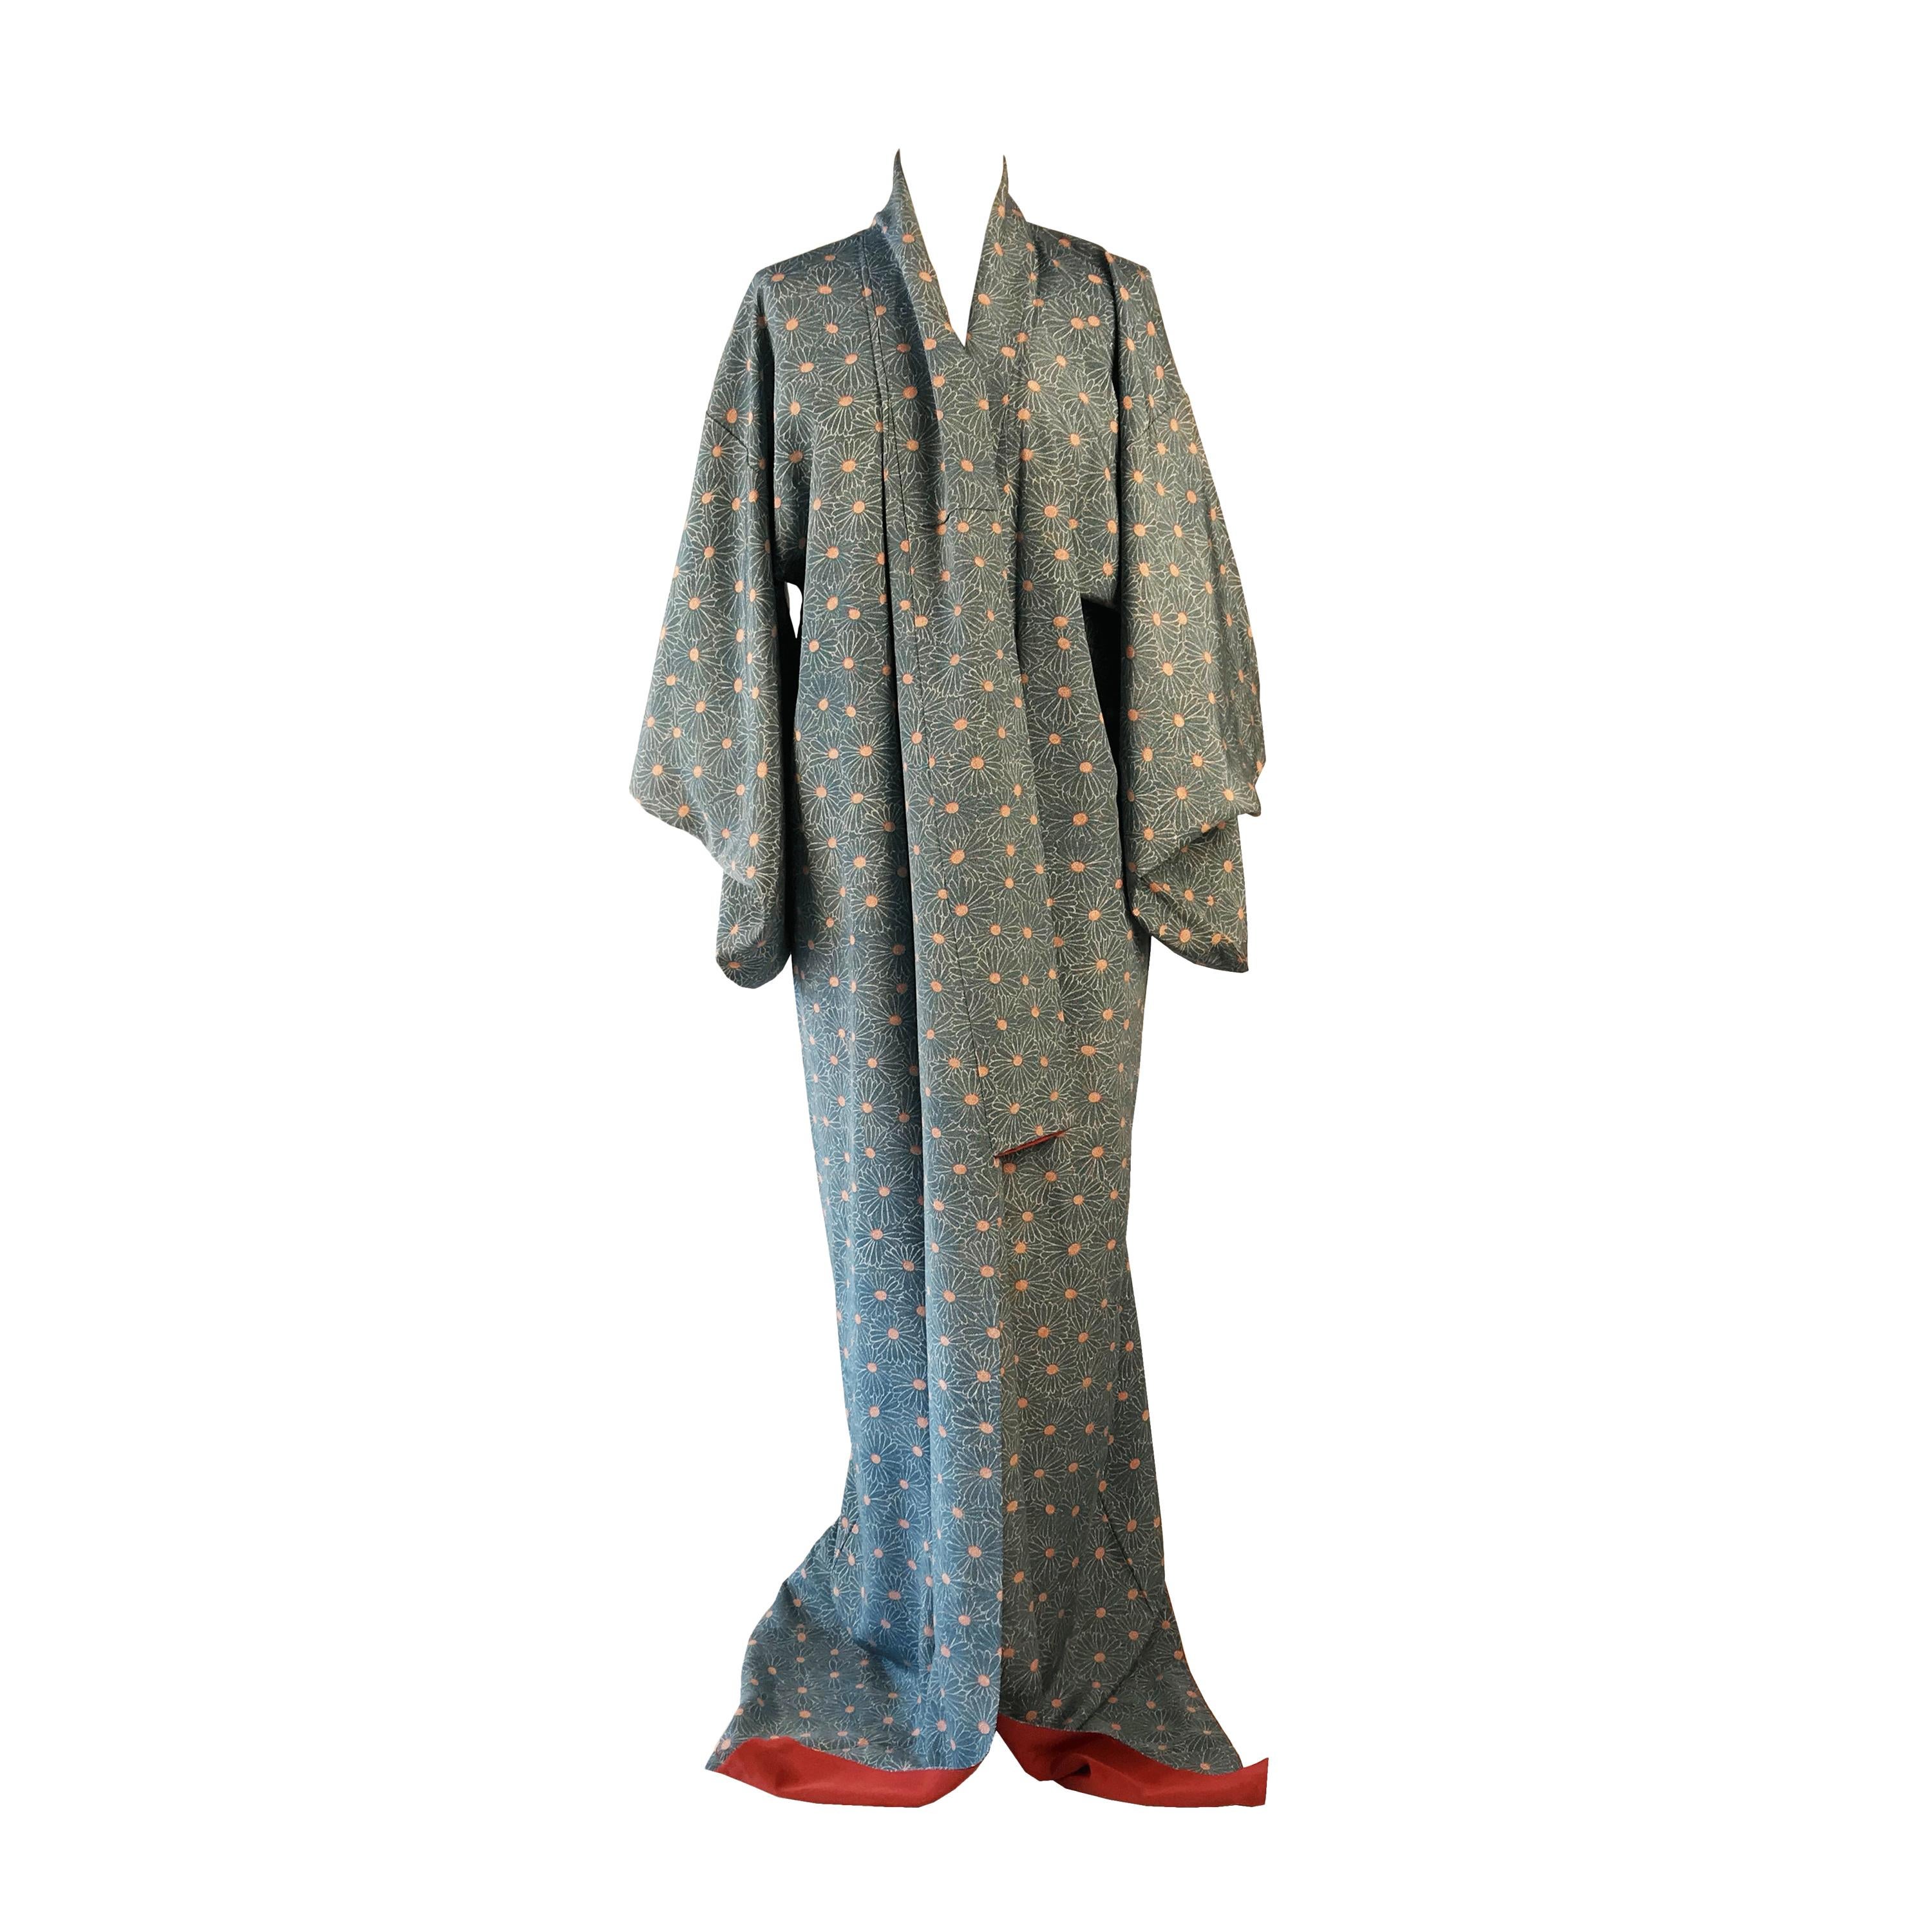 A vintage 1980s beautiful full length silk kimono